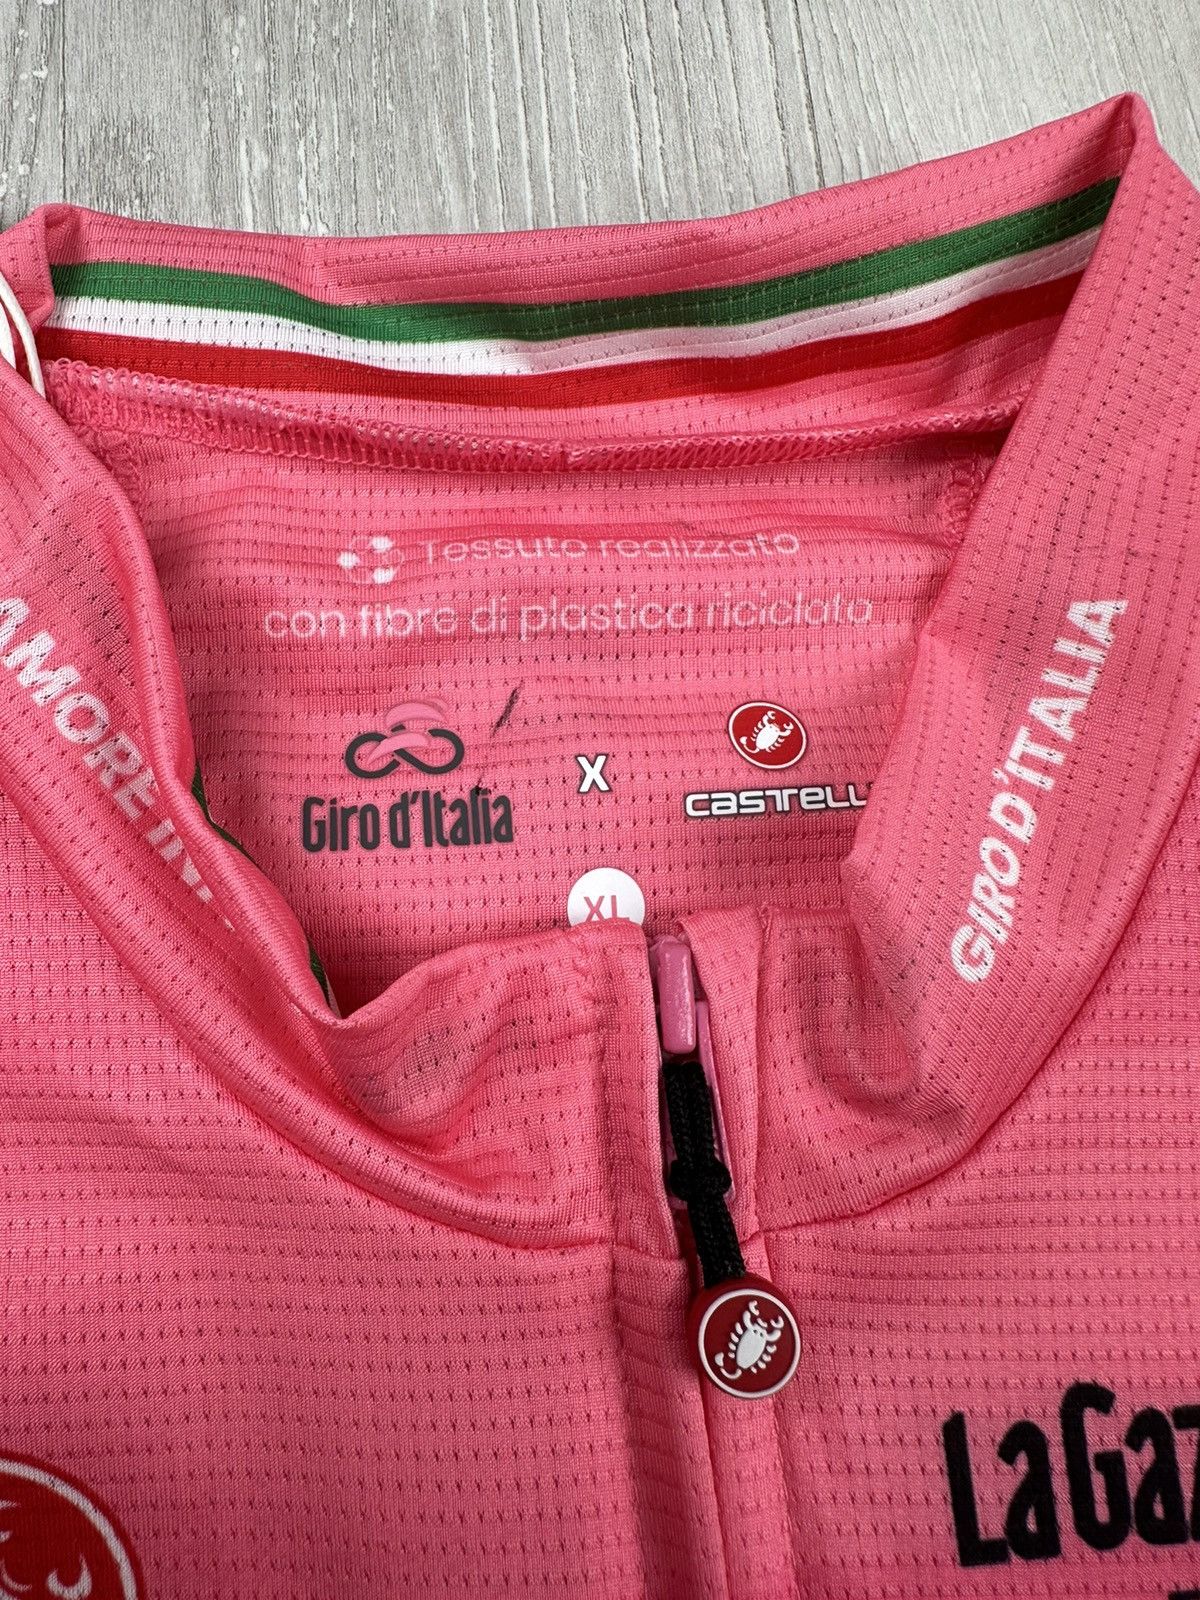 Cycle Castelli x Giro D italia Cycling Shirt Jersey Size US XL / EU 56 / 4 - 7 Thumbnail